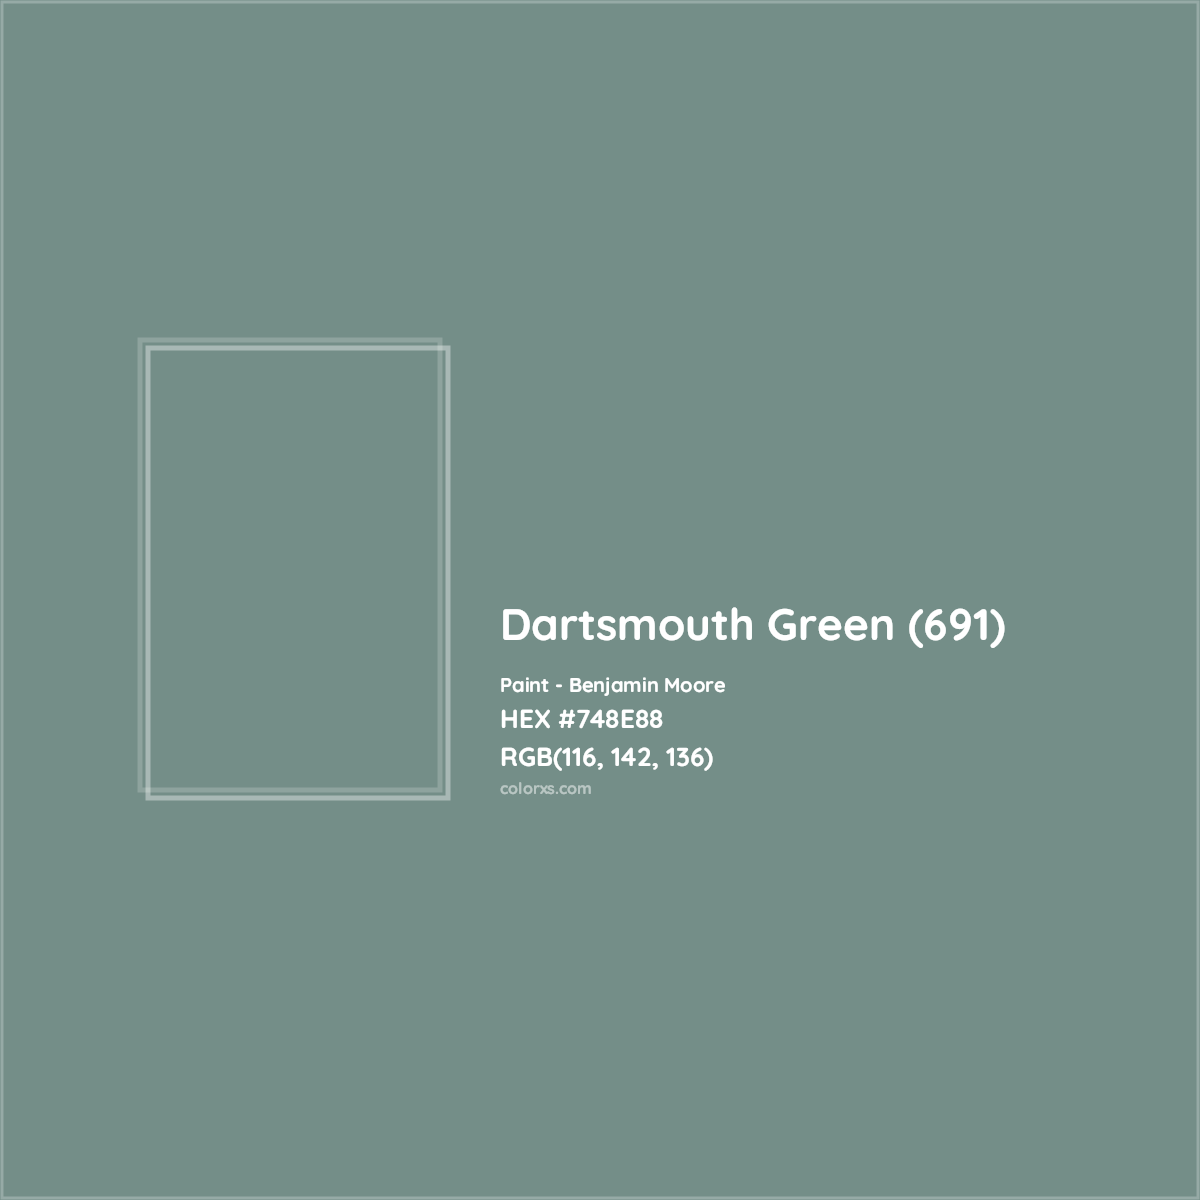 HEX #748E88 Dartsmouth Green (691) Paint Benjamin Moore - Color Code